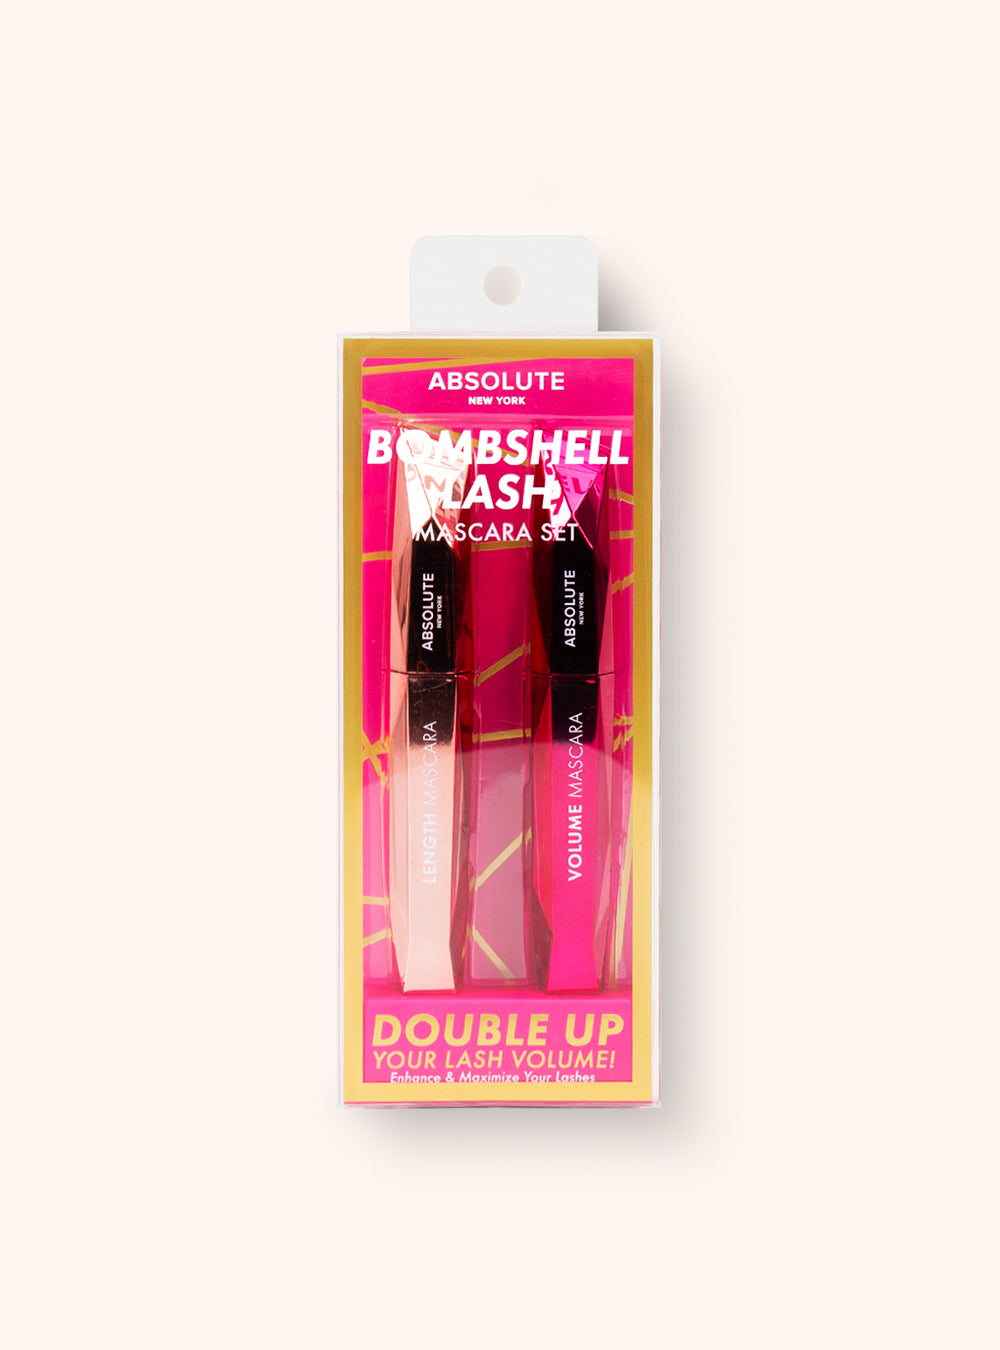 Bombshell Lash Mascara Set